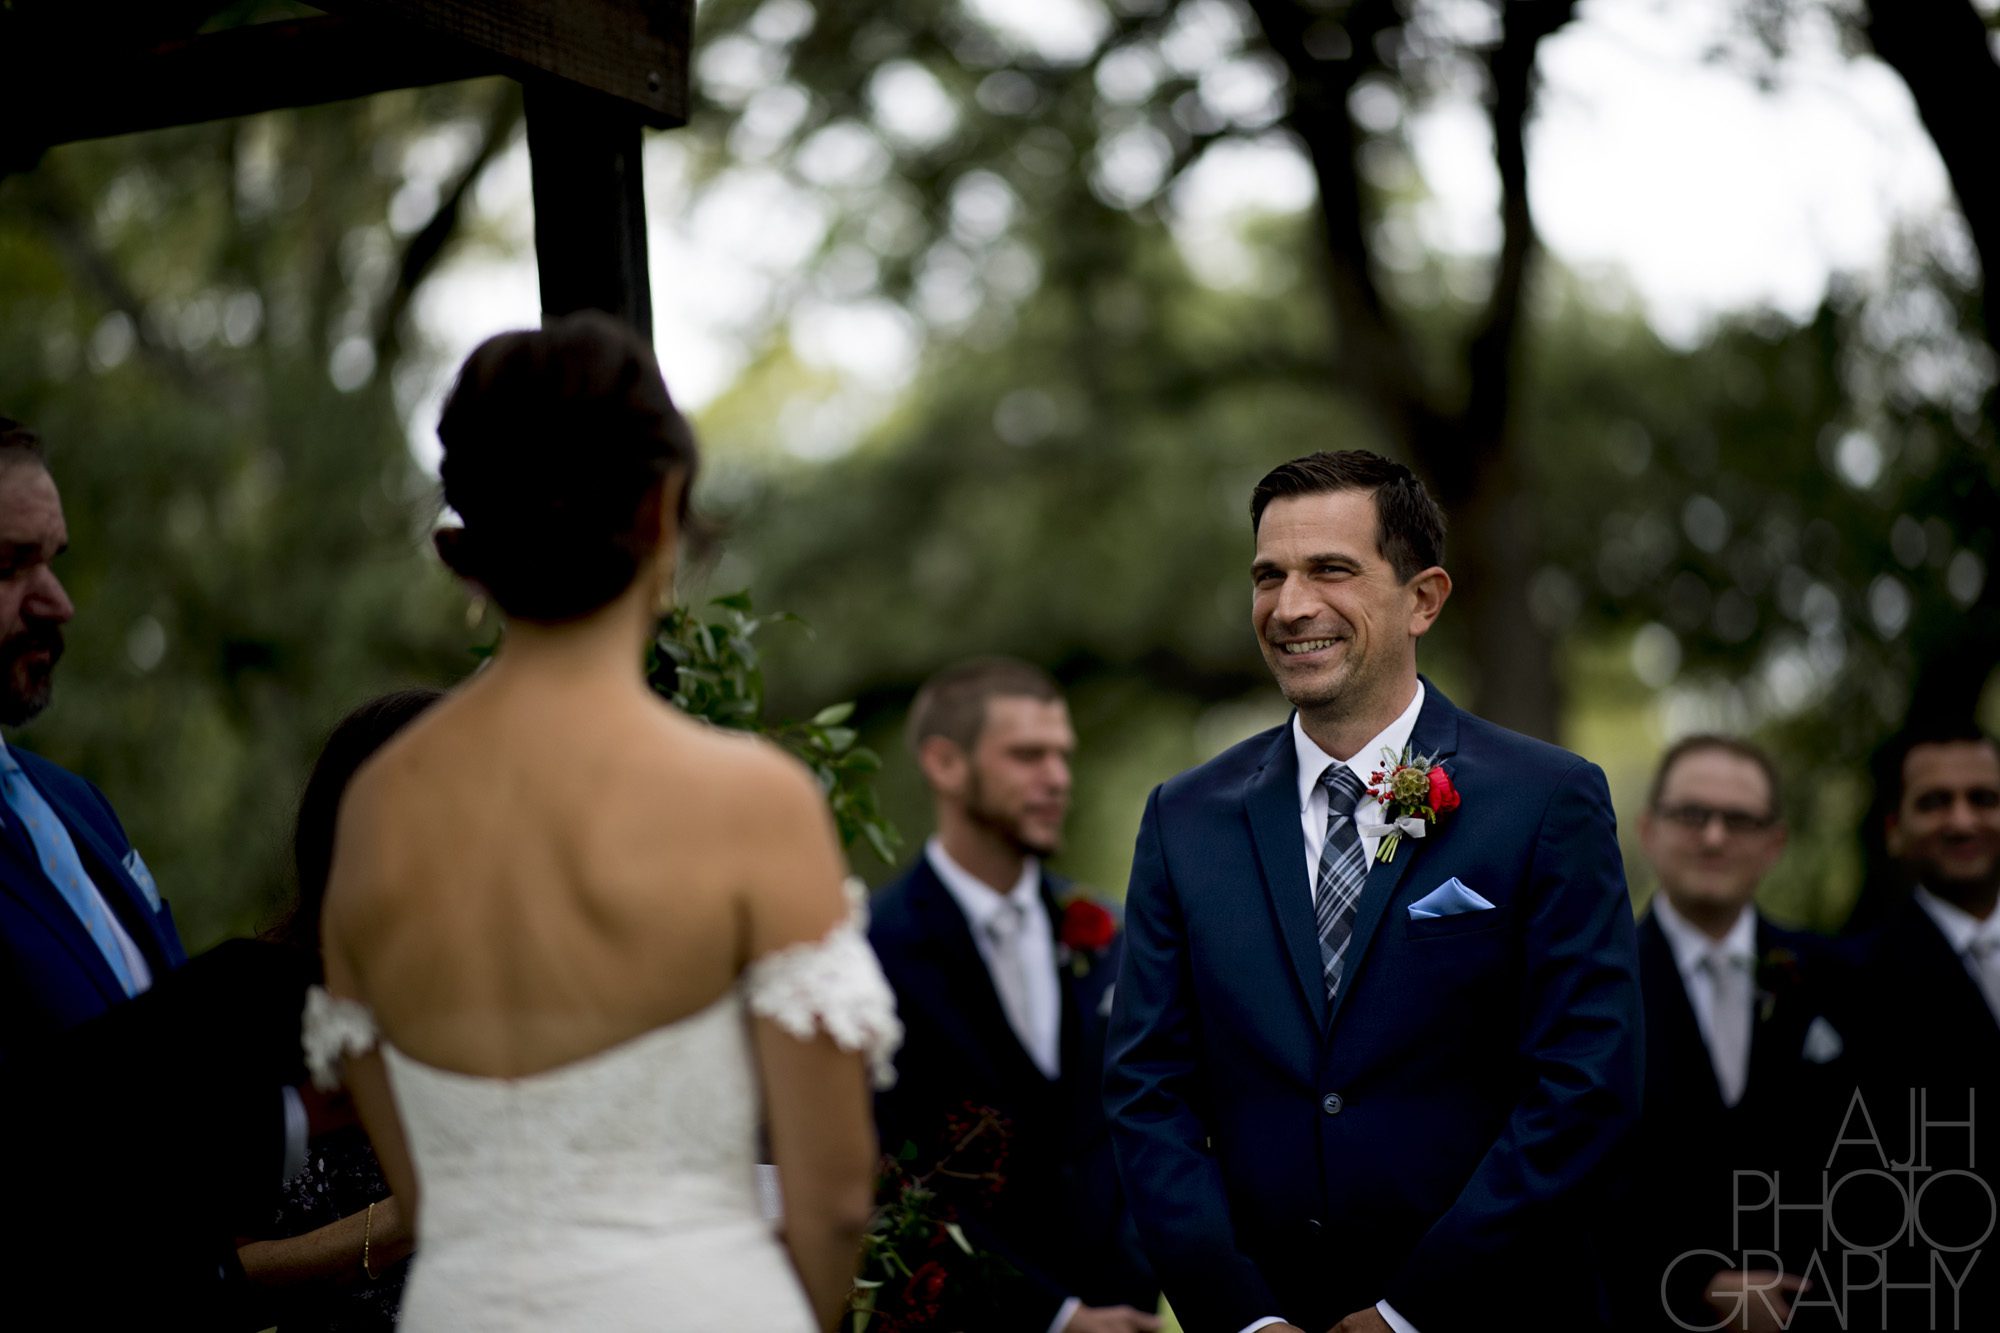 Addison Grove Wedding - AJH Photography